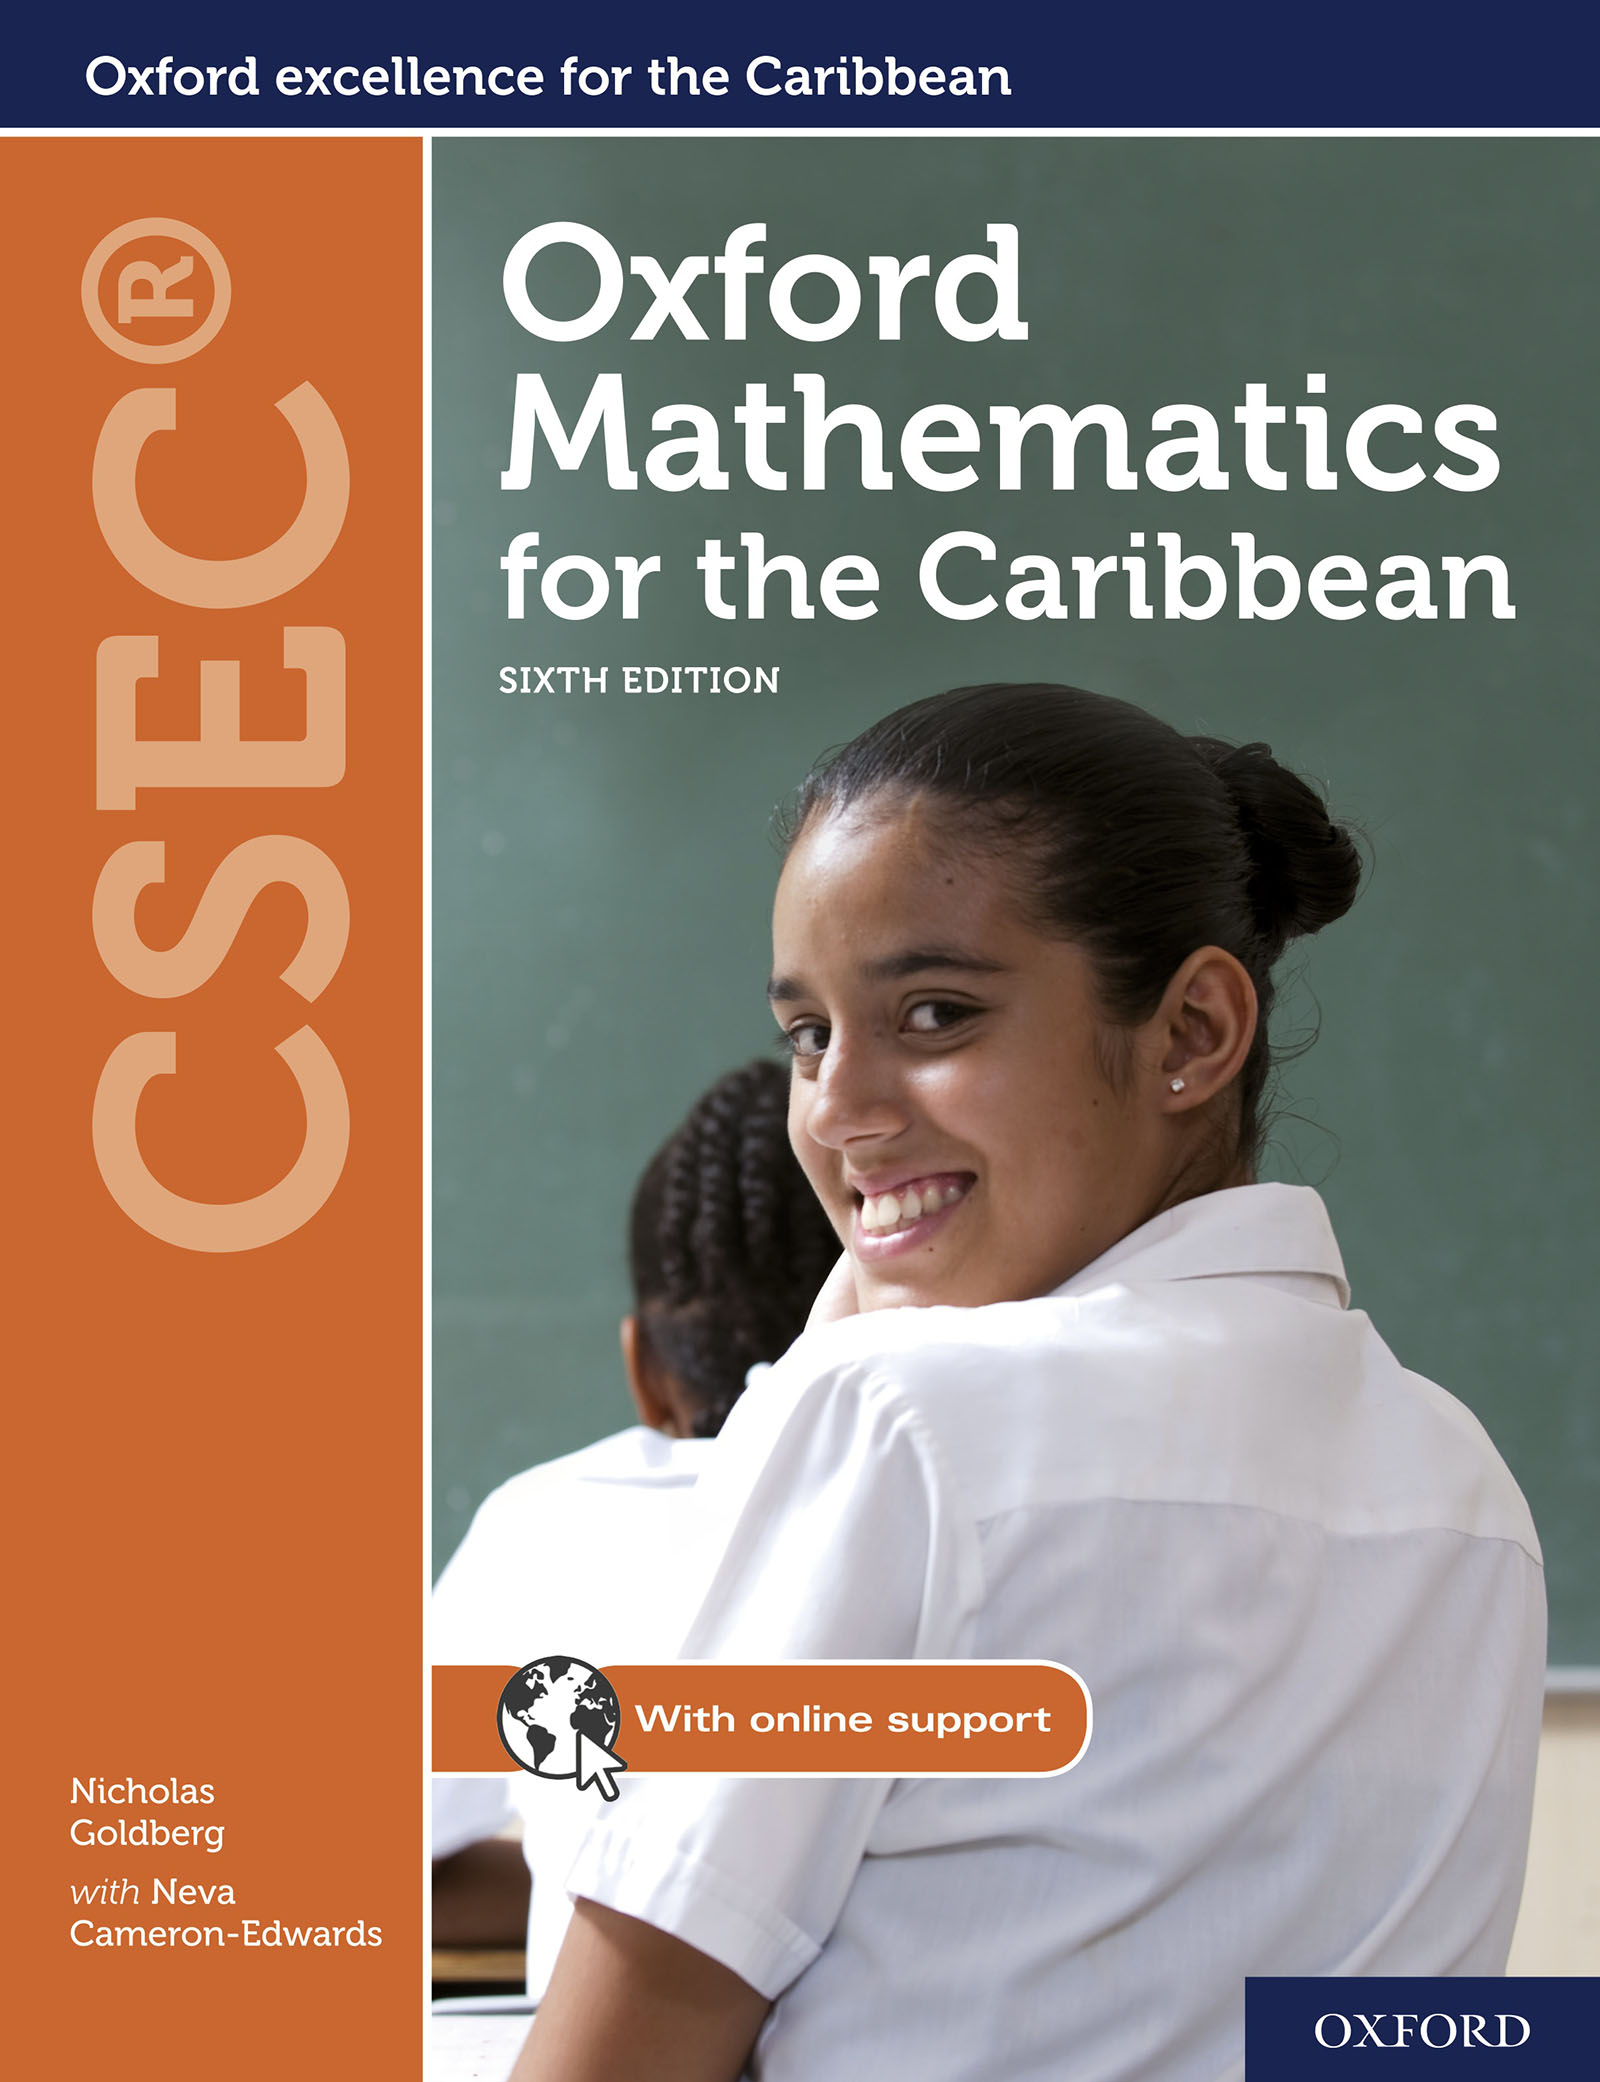 Oxford Mathematics for the Caribbean CSEC